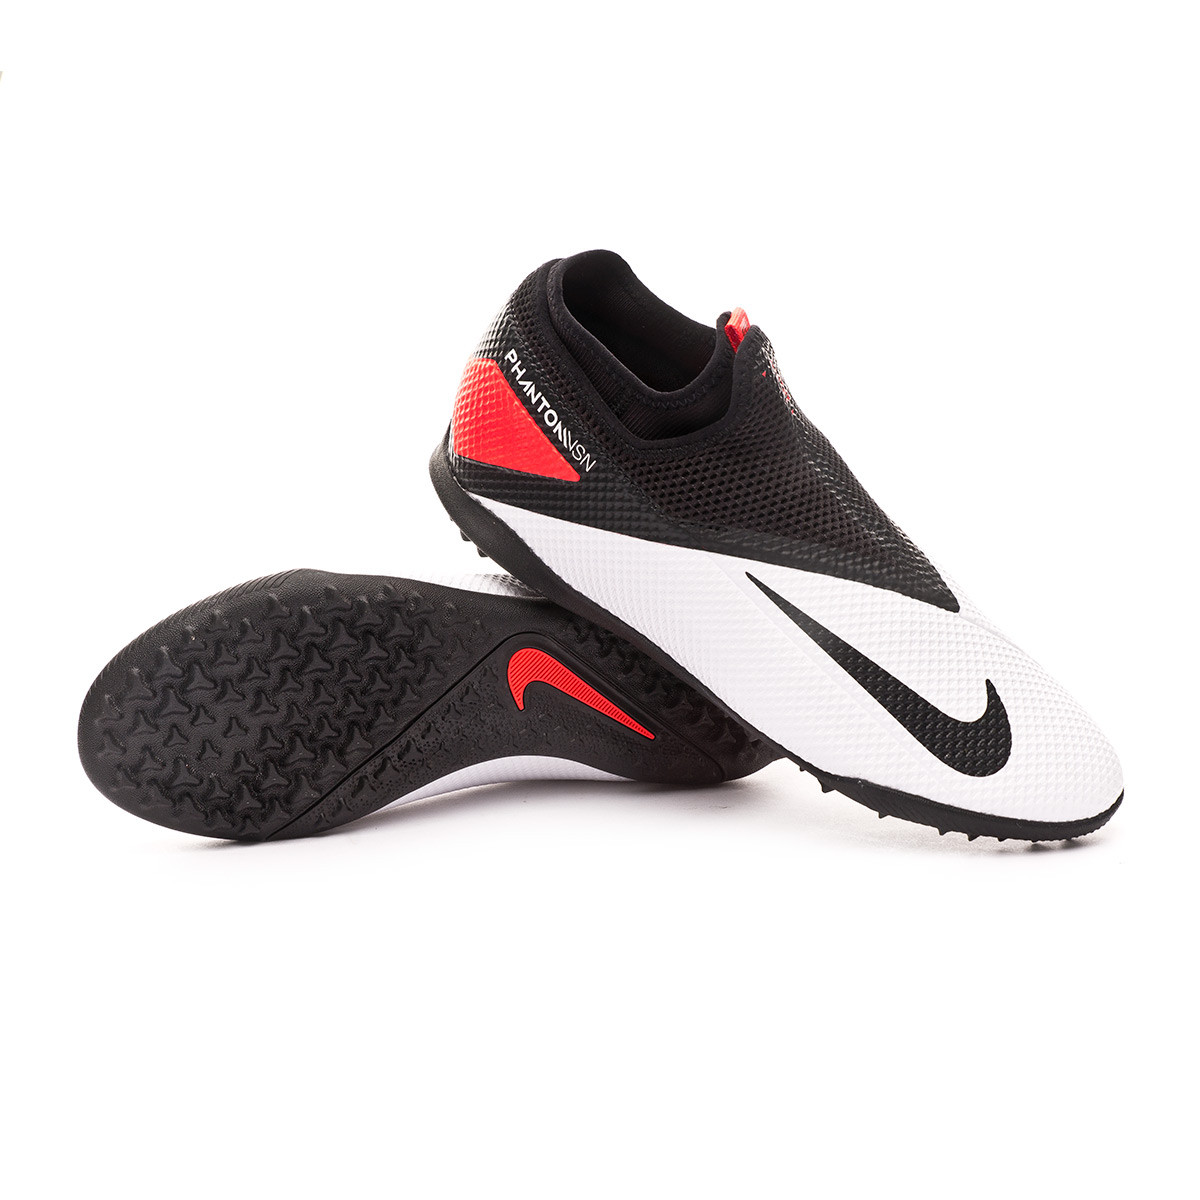 Tenis Nike Phantom Vision II Academy DF Turf White-Black-Laser crimson -  Tienda de fútbol Fútbol Emotion